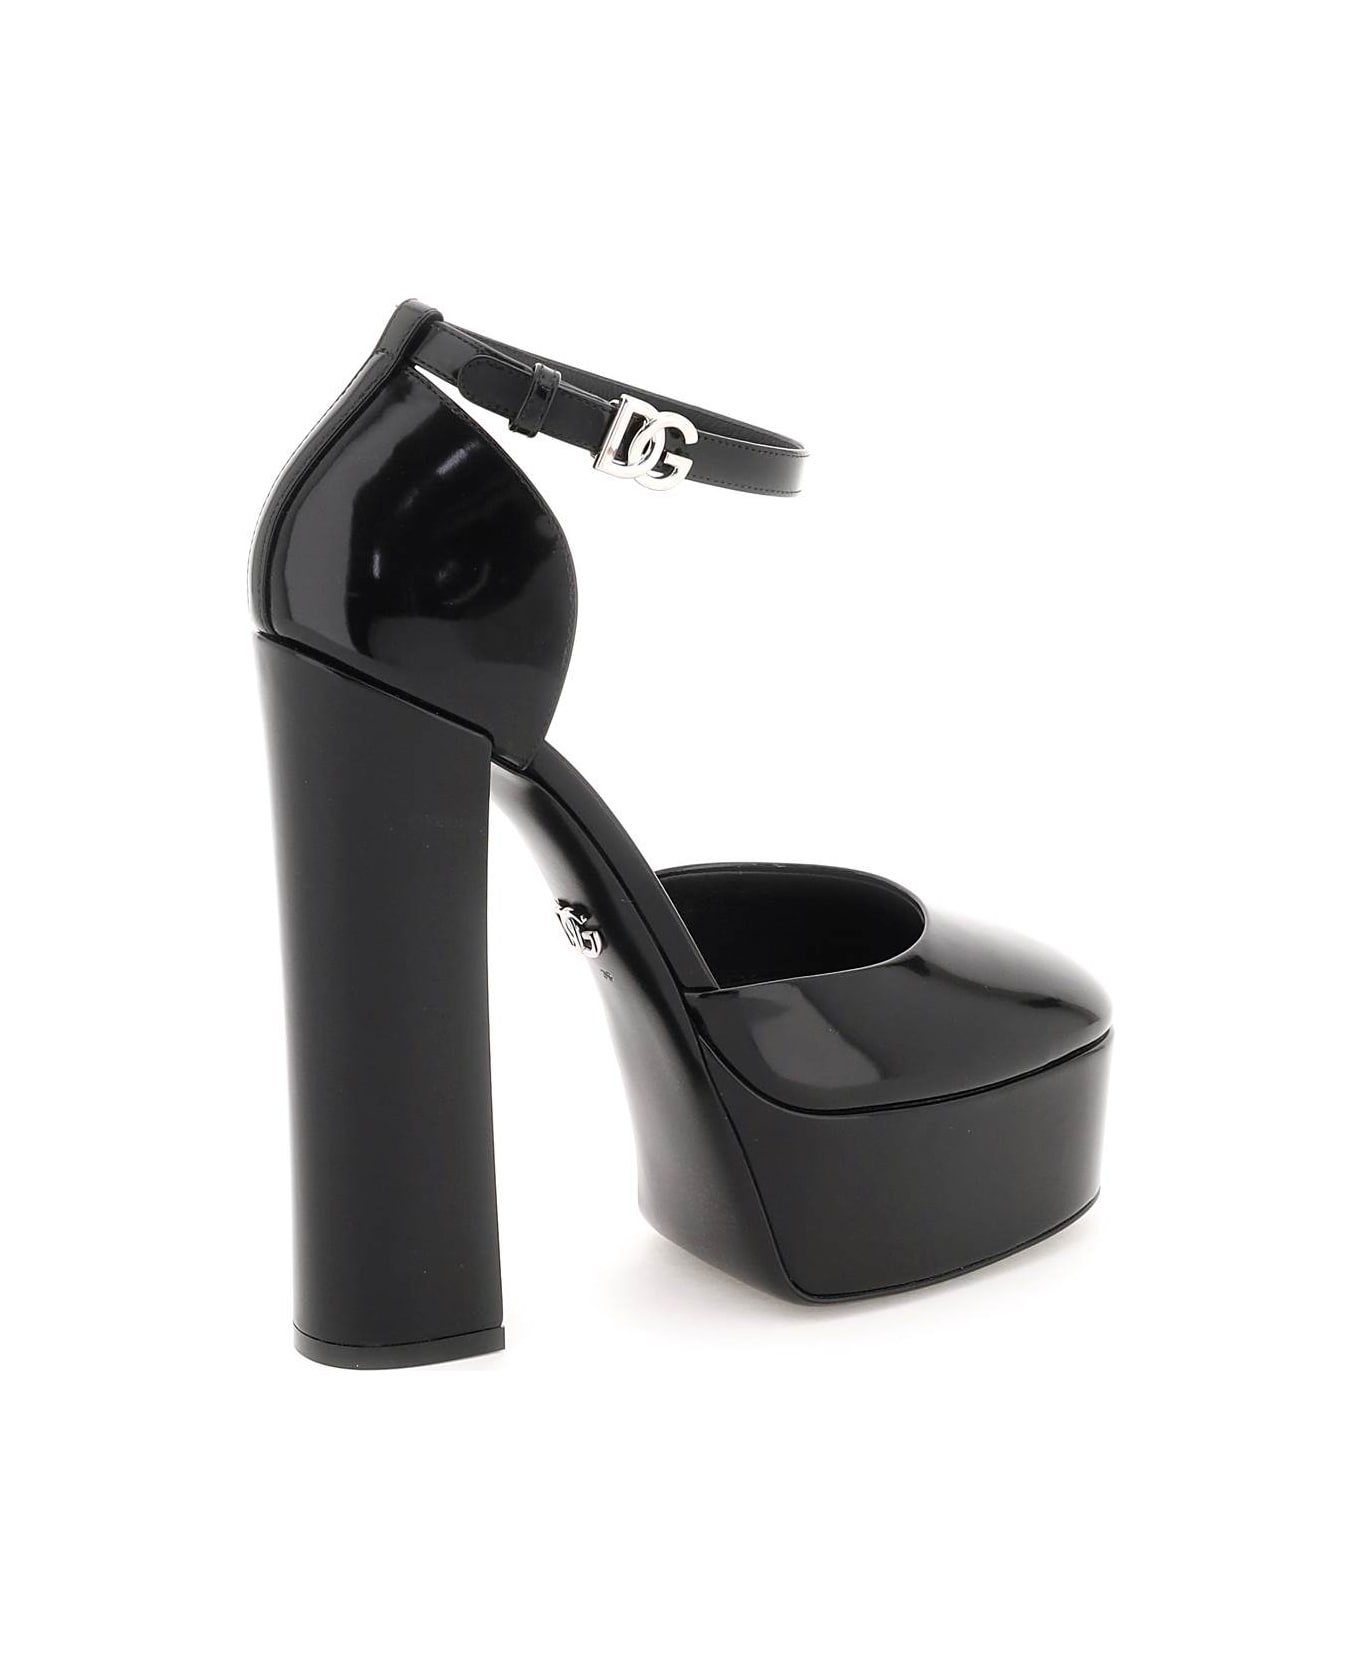 Dolce & Gabbana Polished Leather Platform Pumps - NERO (Black)